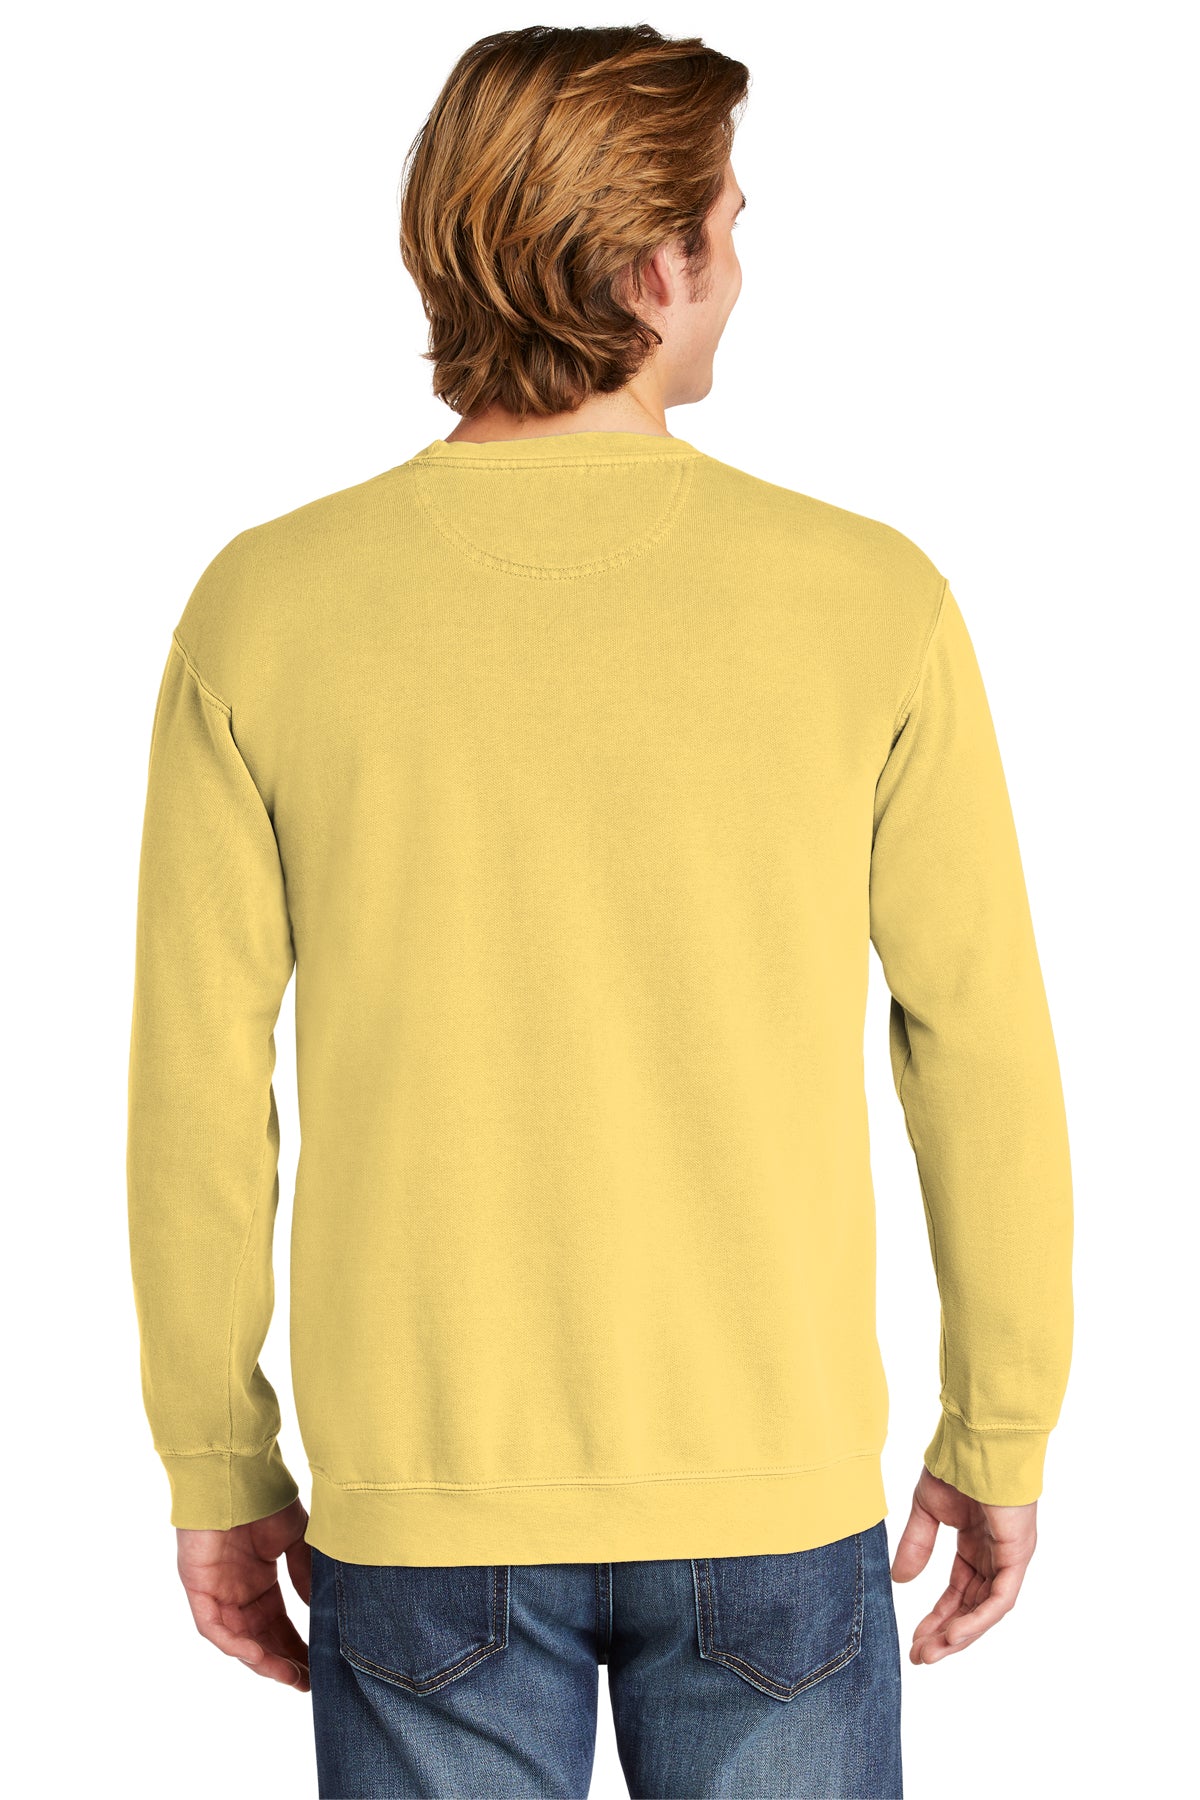 Custom Comfort Colors Garment-Dyed Crewneck Sweatshirt (1566)